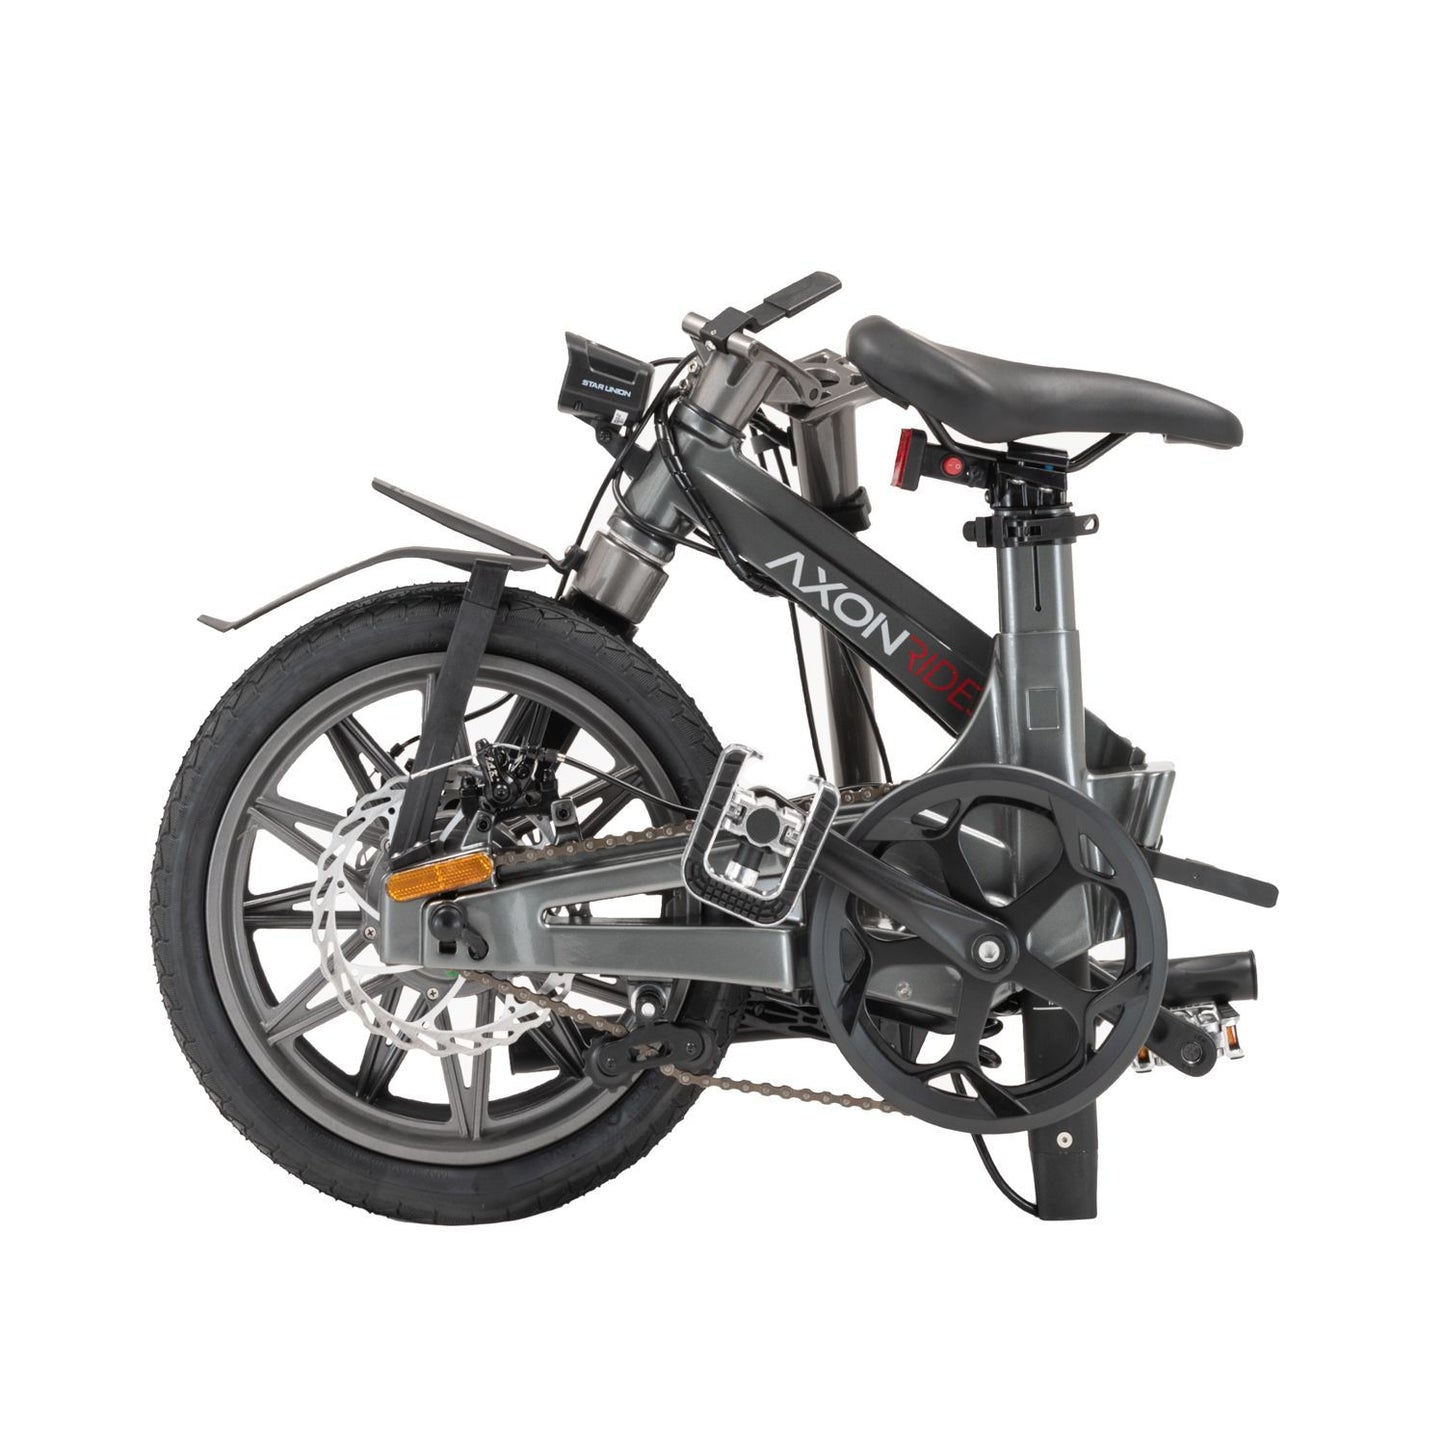 Axon Rides Eco-S Electric Bike